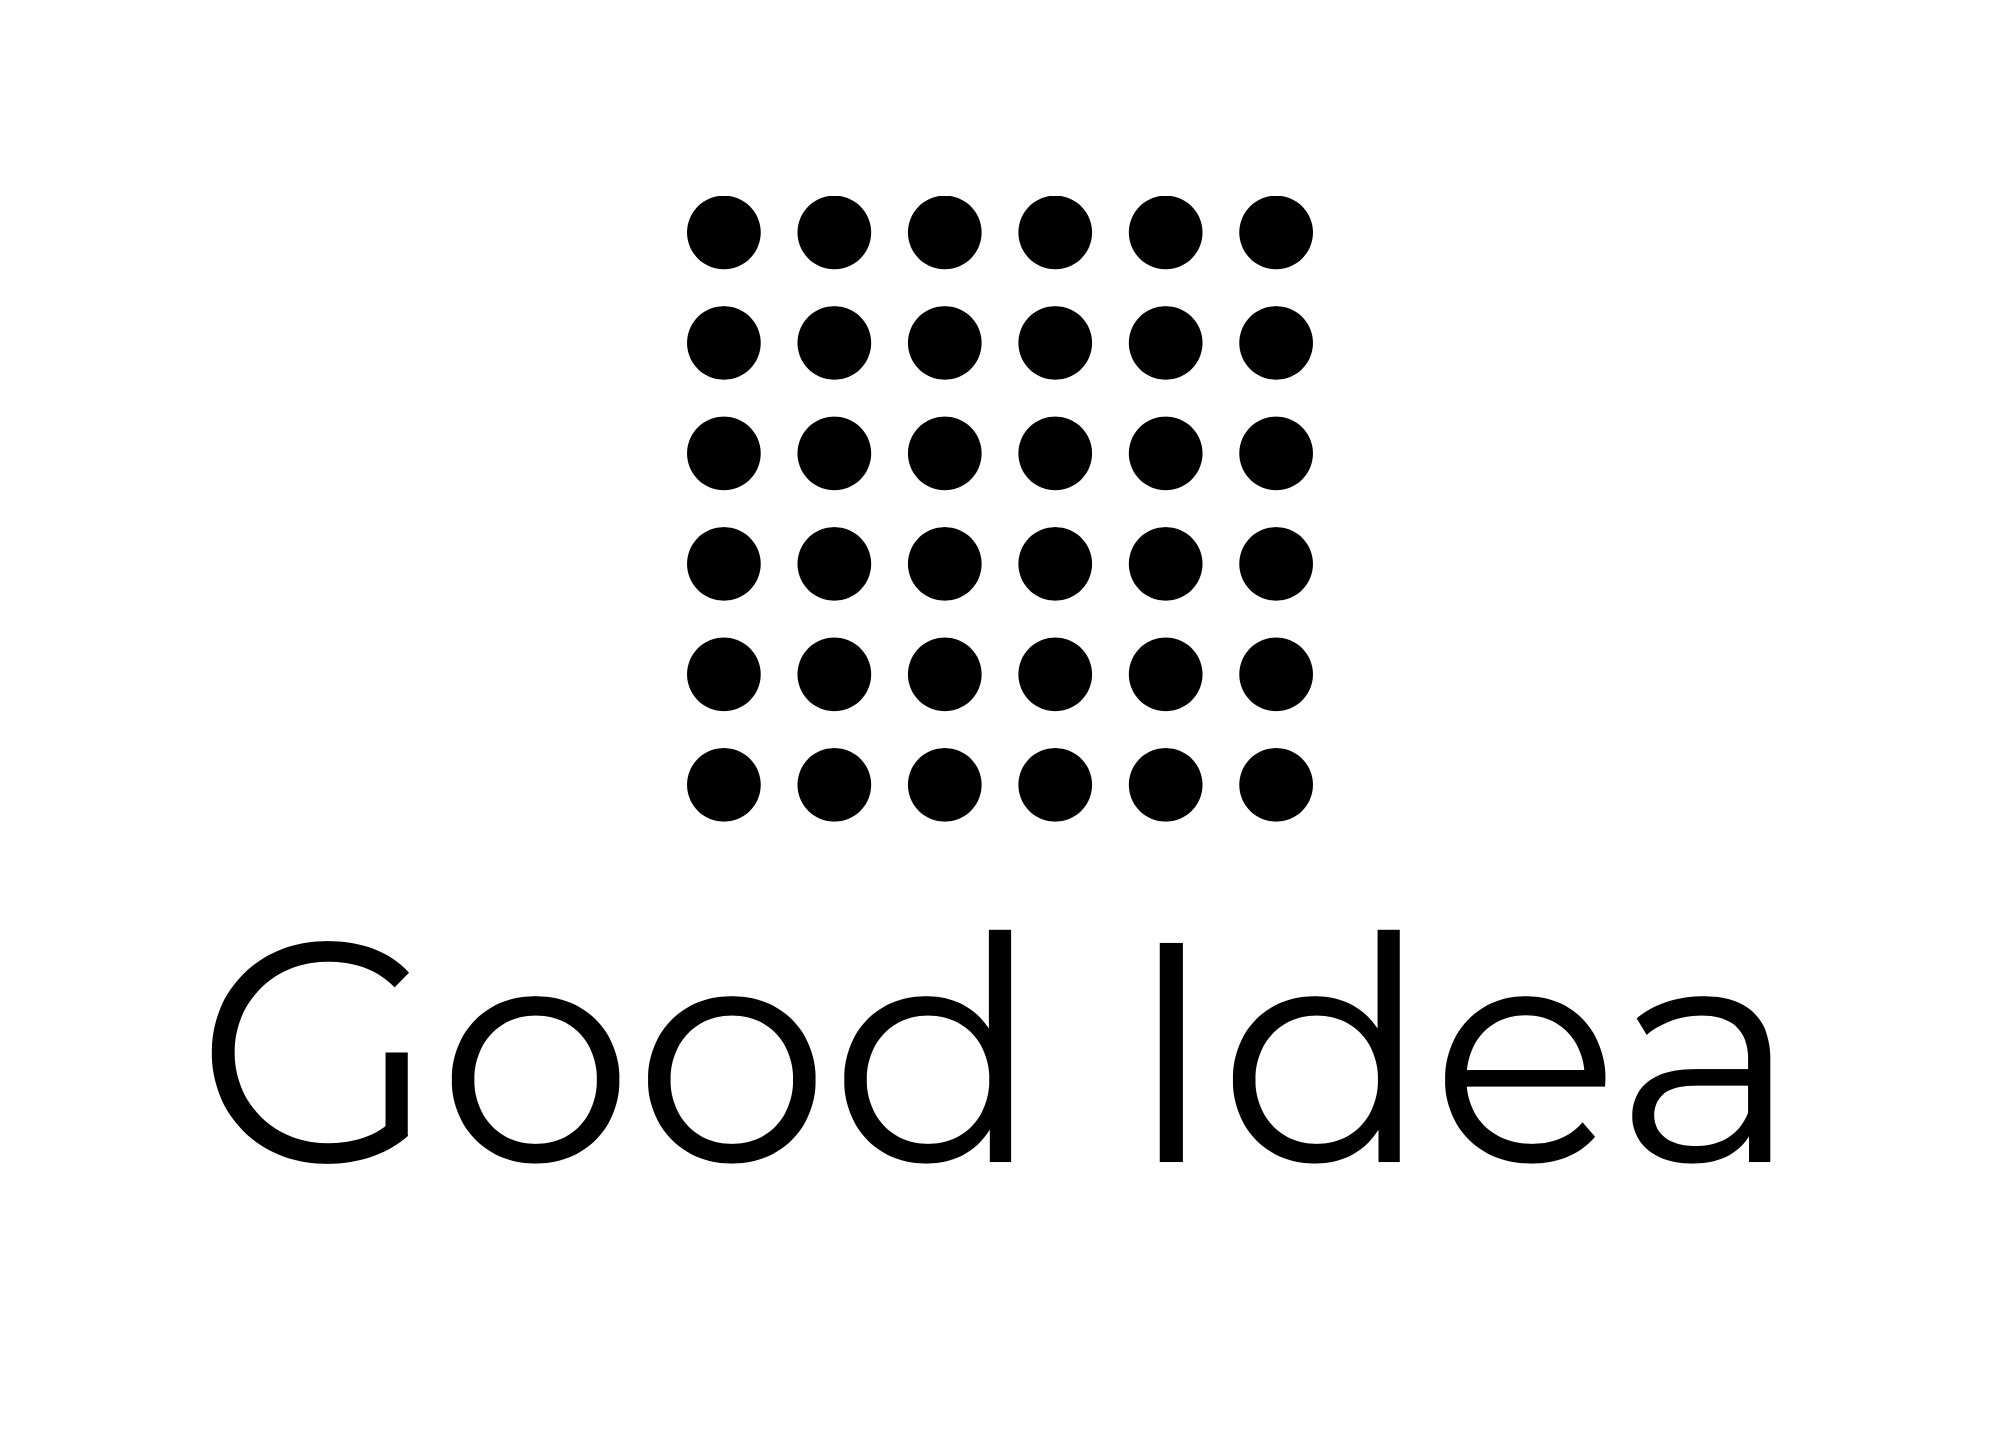 https://images.squarespace-cdn.com/content/v1/627a7a2dc4b9340f24aed41e/c70646ac-df6d-47eb-984c-ab6c8072e127/Good+Idea-logo-black.jpg